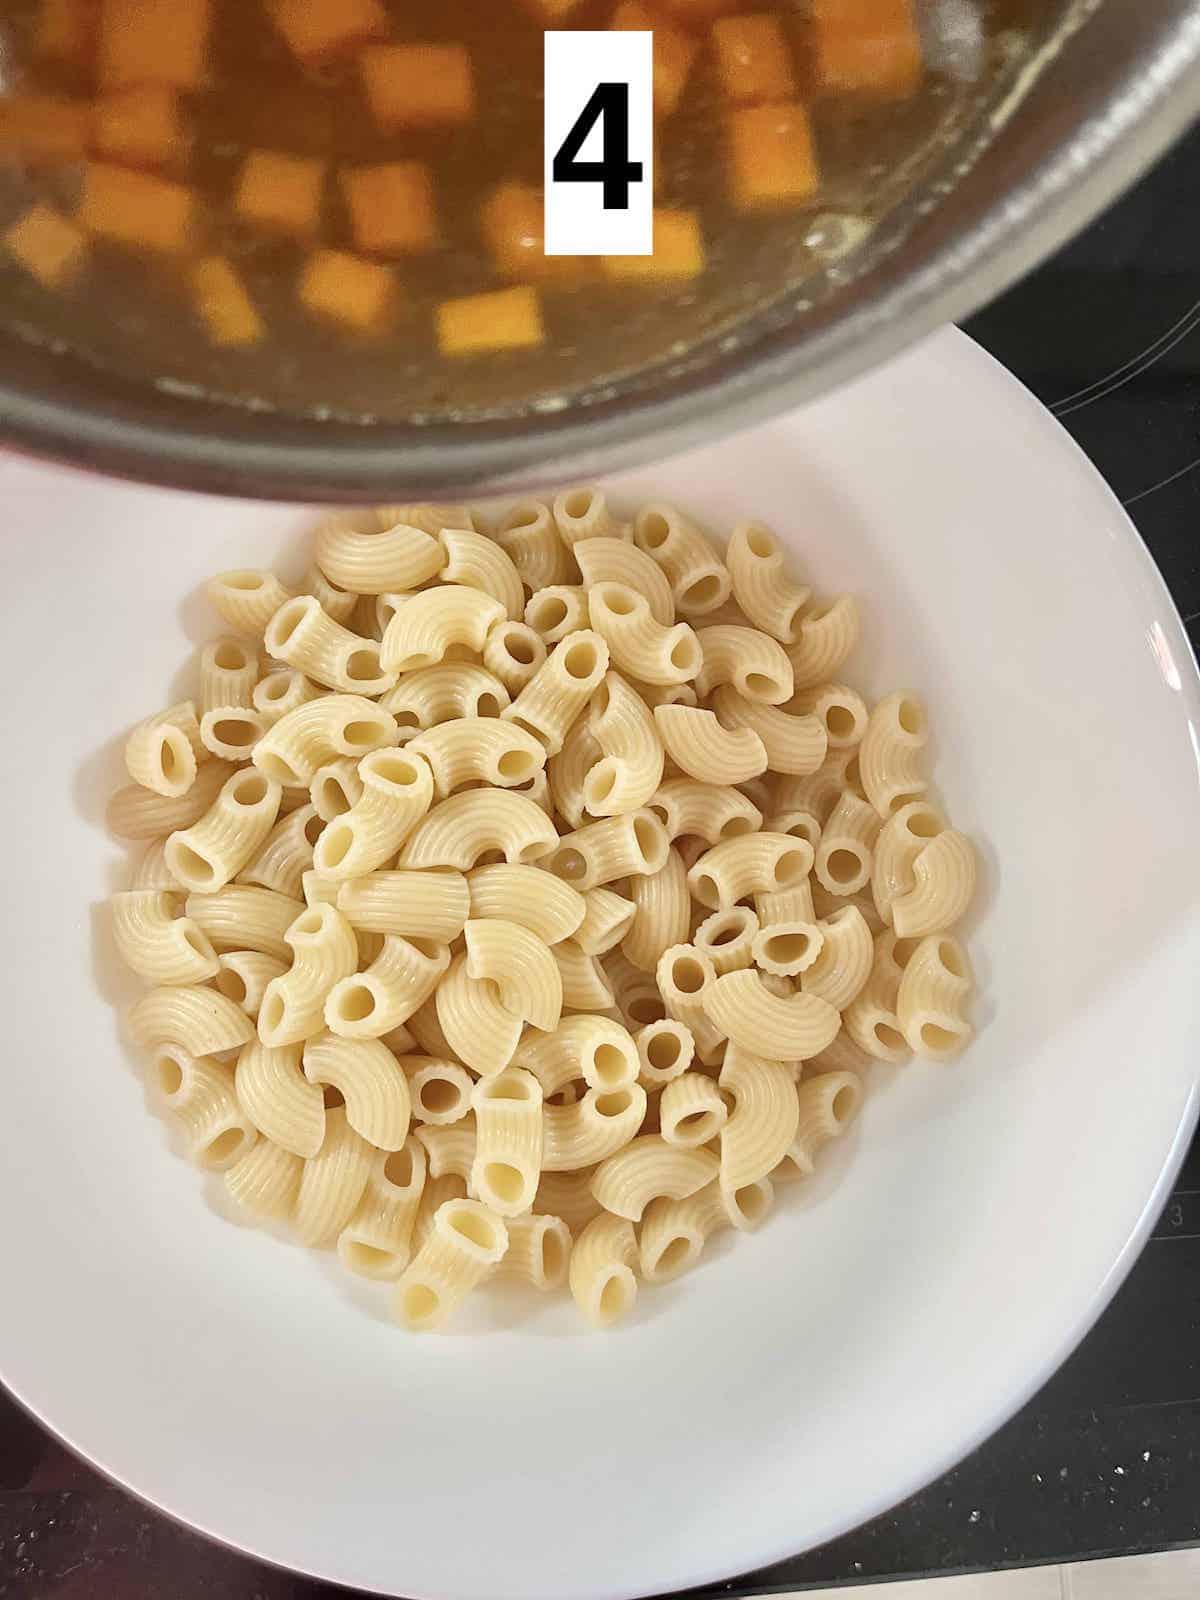 Pouring soup into a bowl of macaroni.